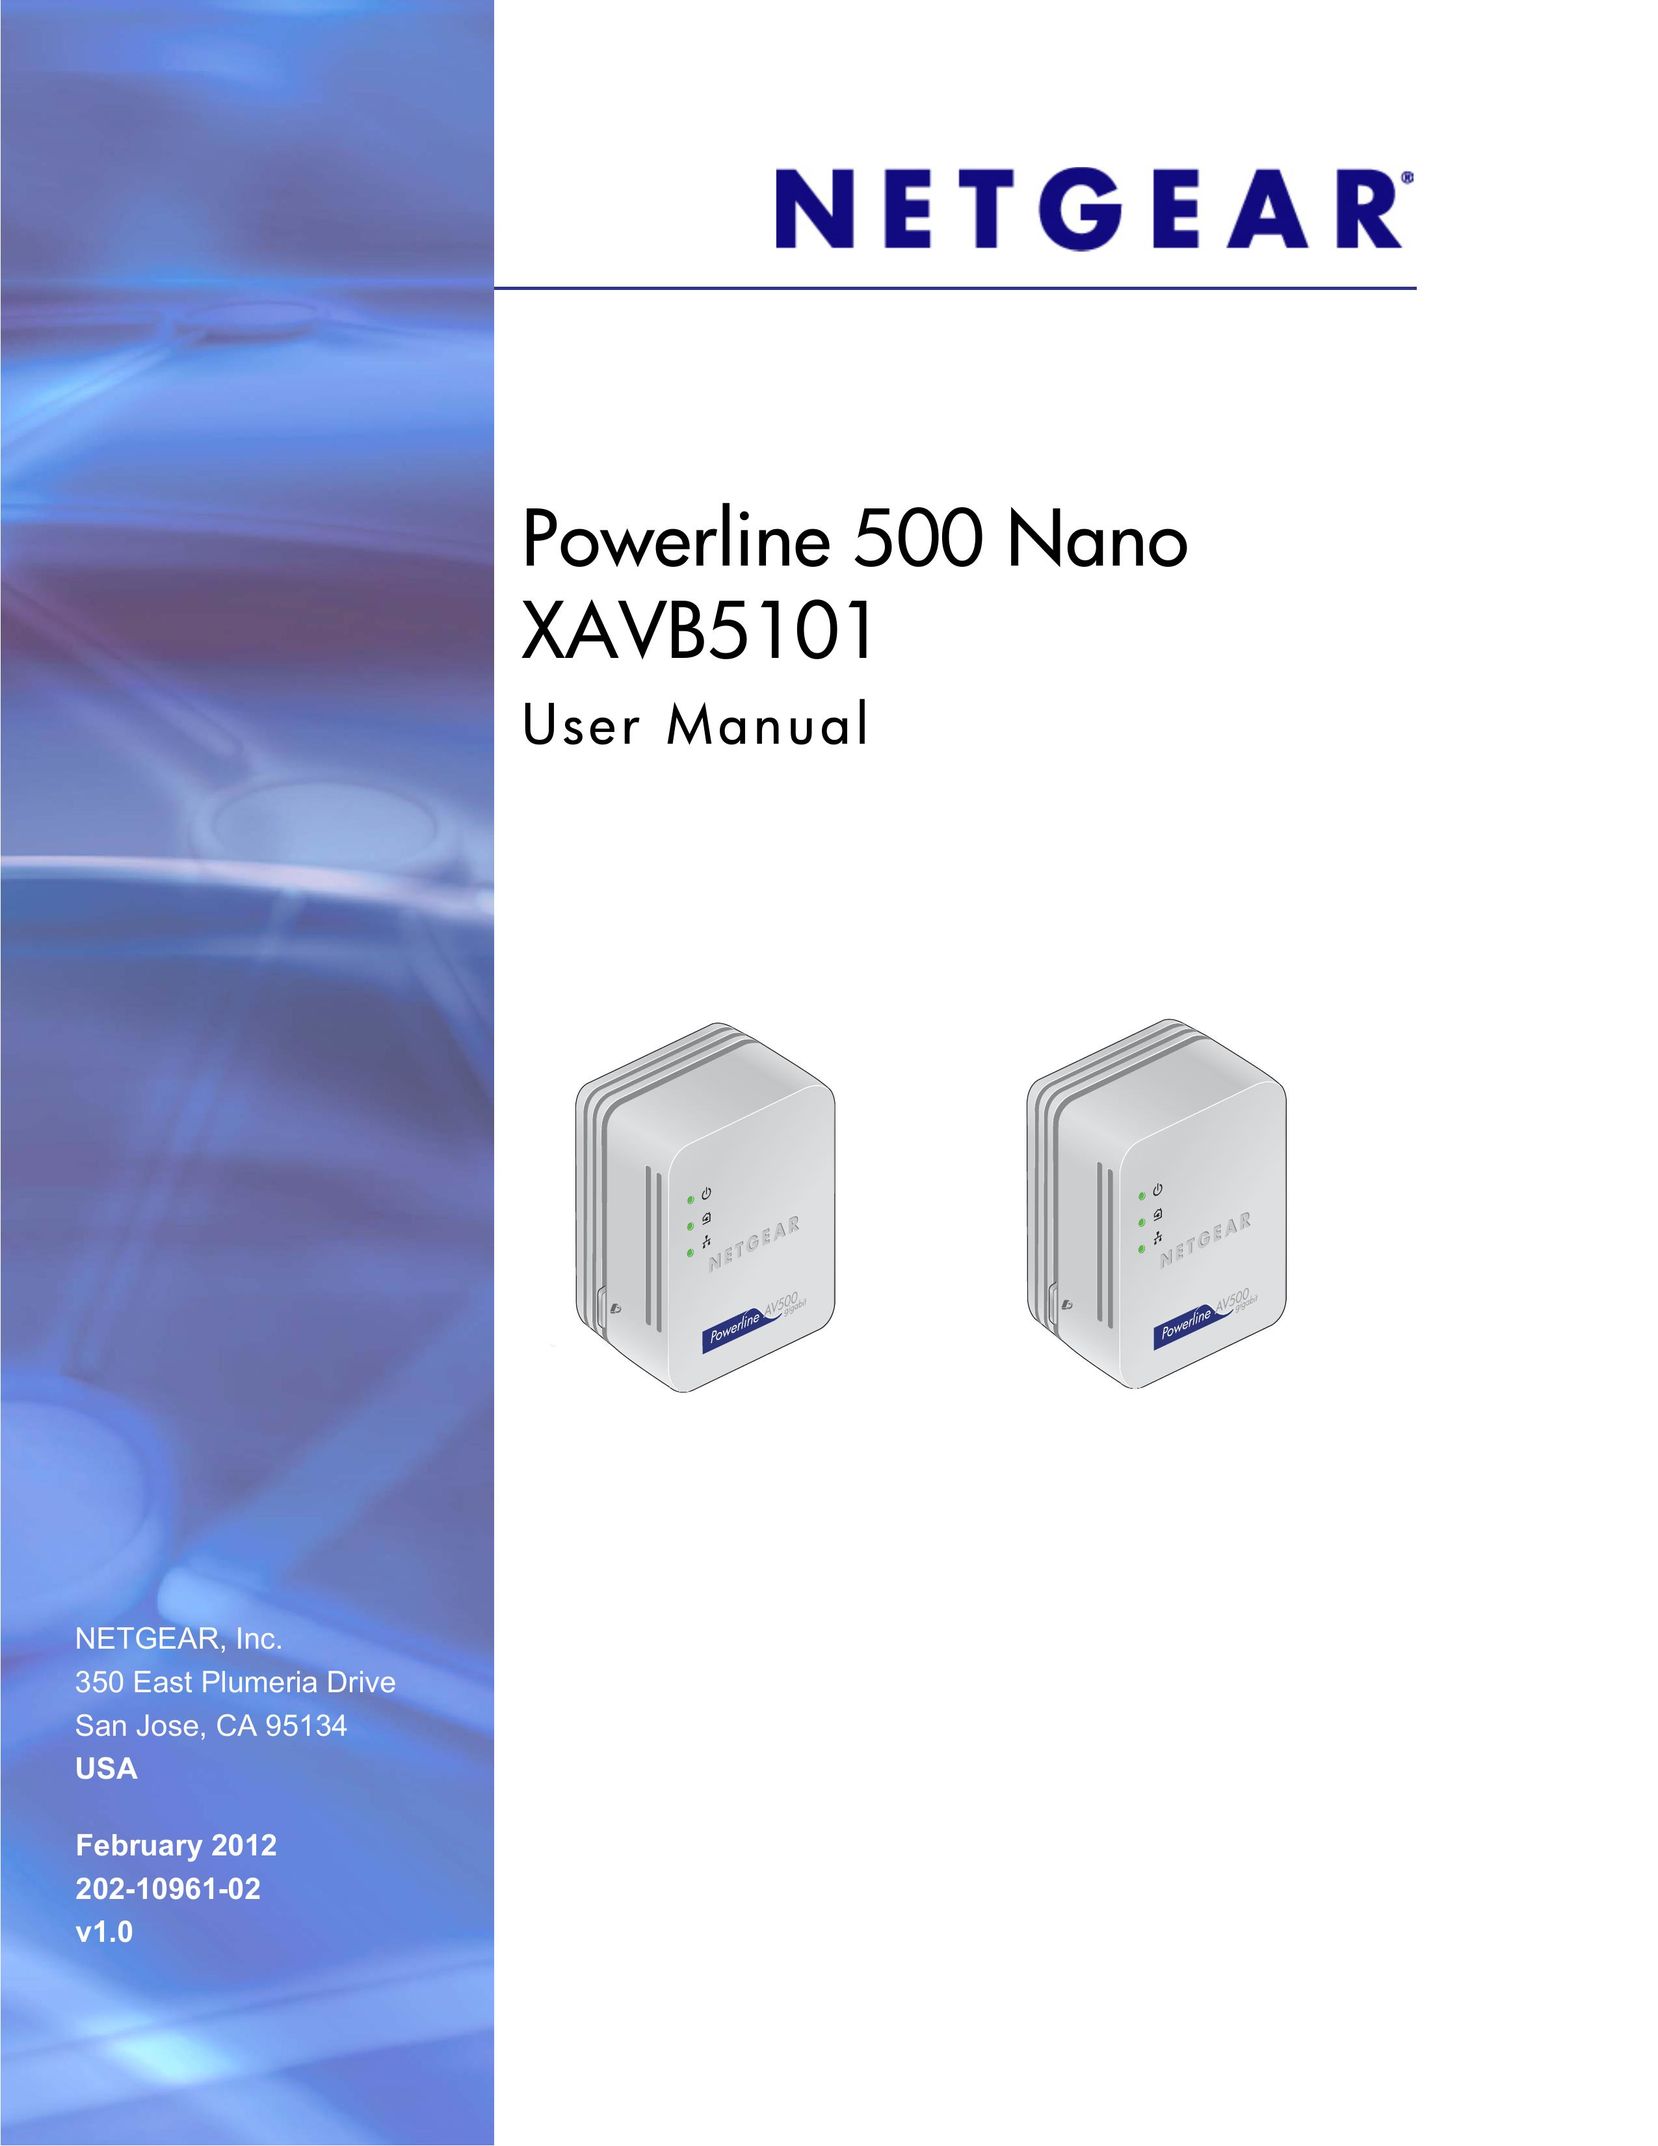 NETGEAR XAVB5101-100PAS Network Hardware User Manual